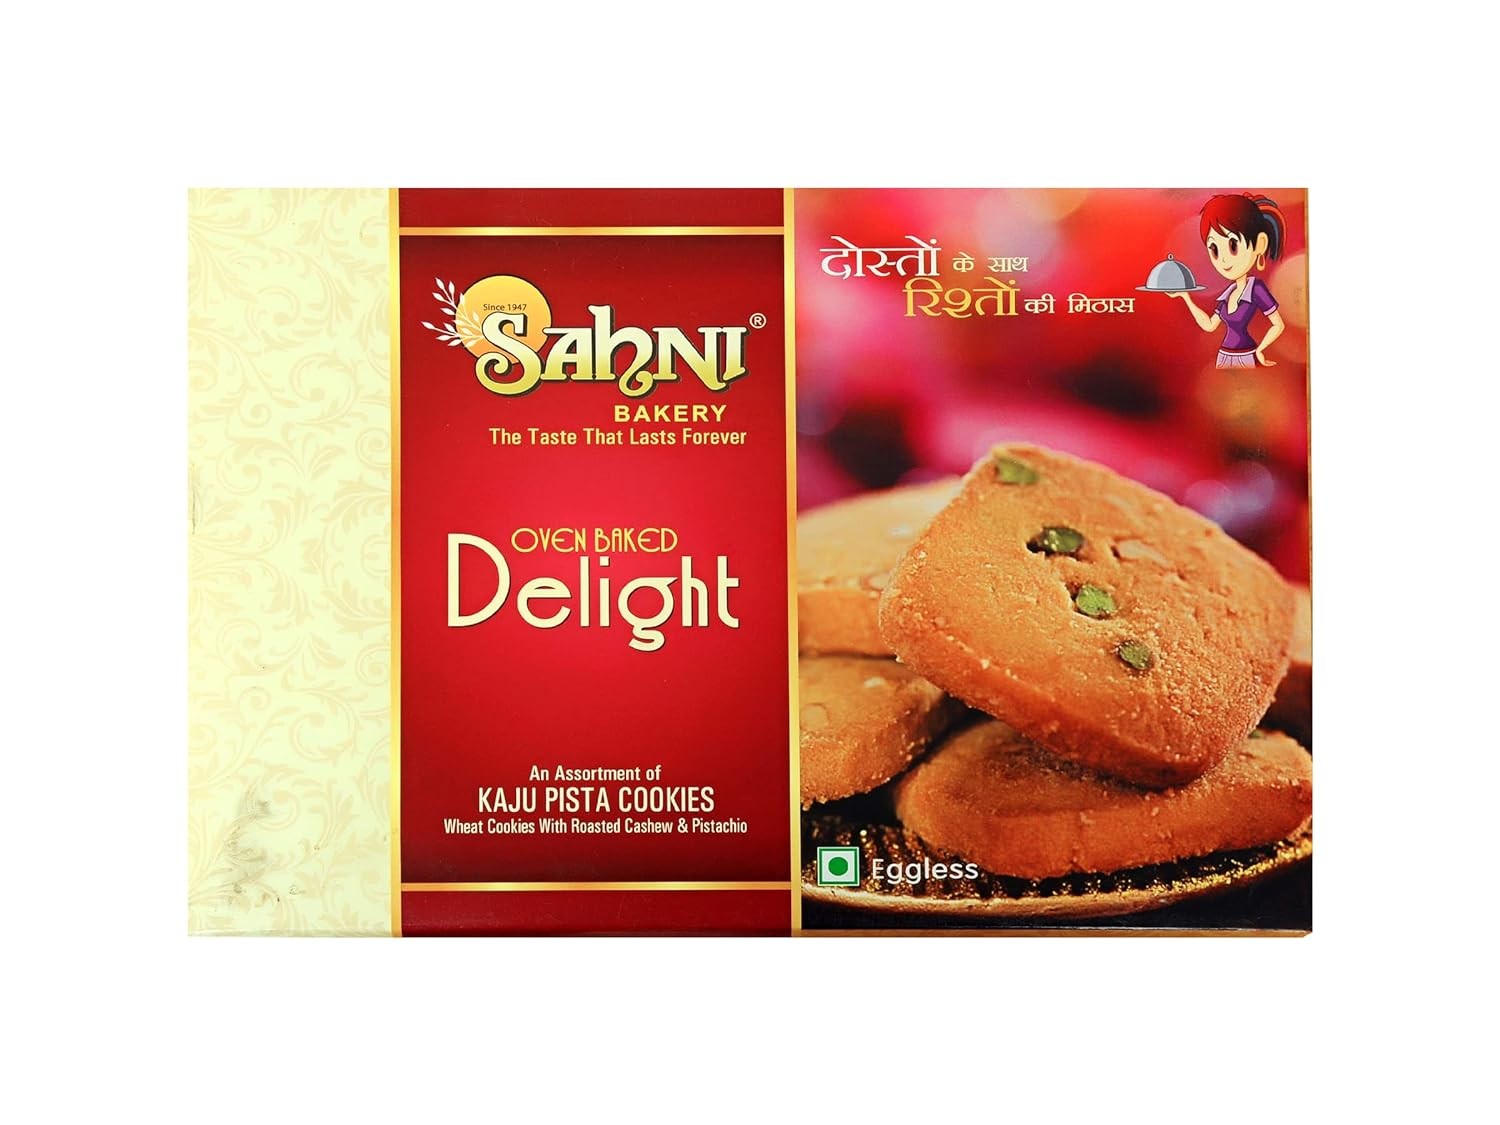 SAhNI BAKERY Kaju Pista Biscuit Bakery Baked Kaju Pista Cookies Ideal Tea Snack and Gifting Item (pack of 1-800gm)